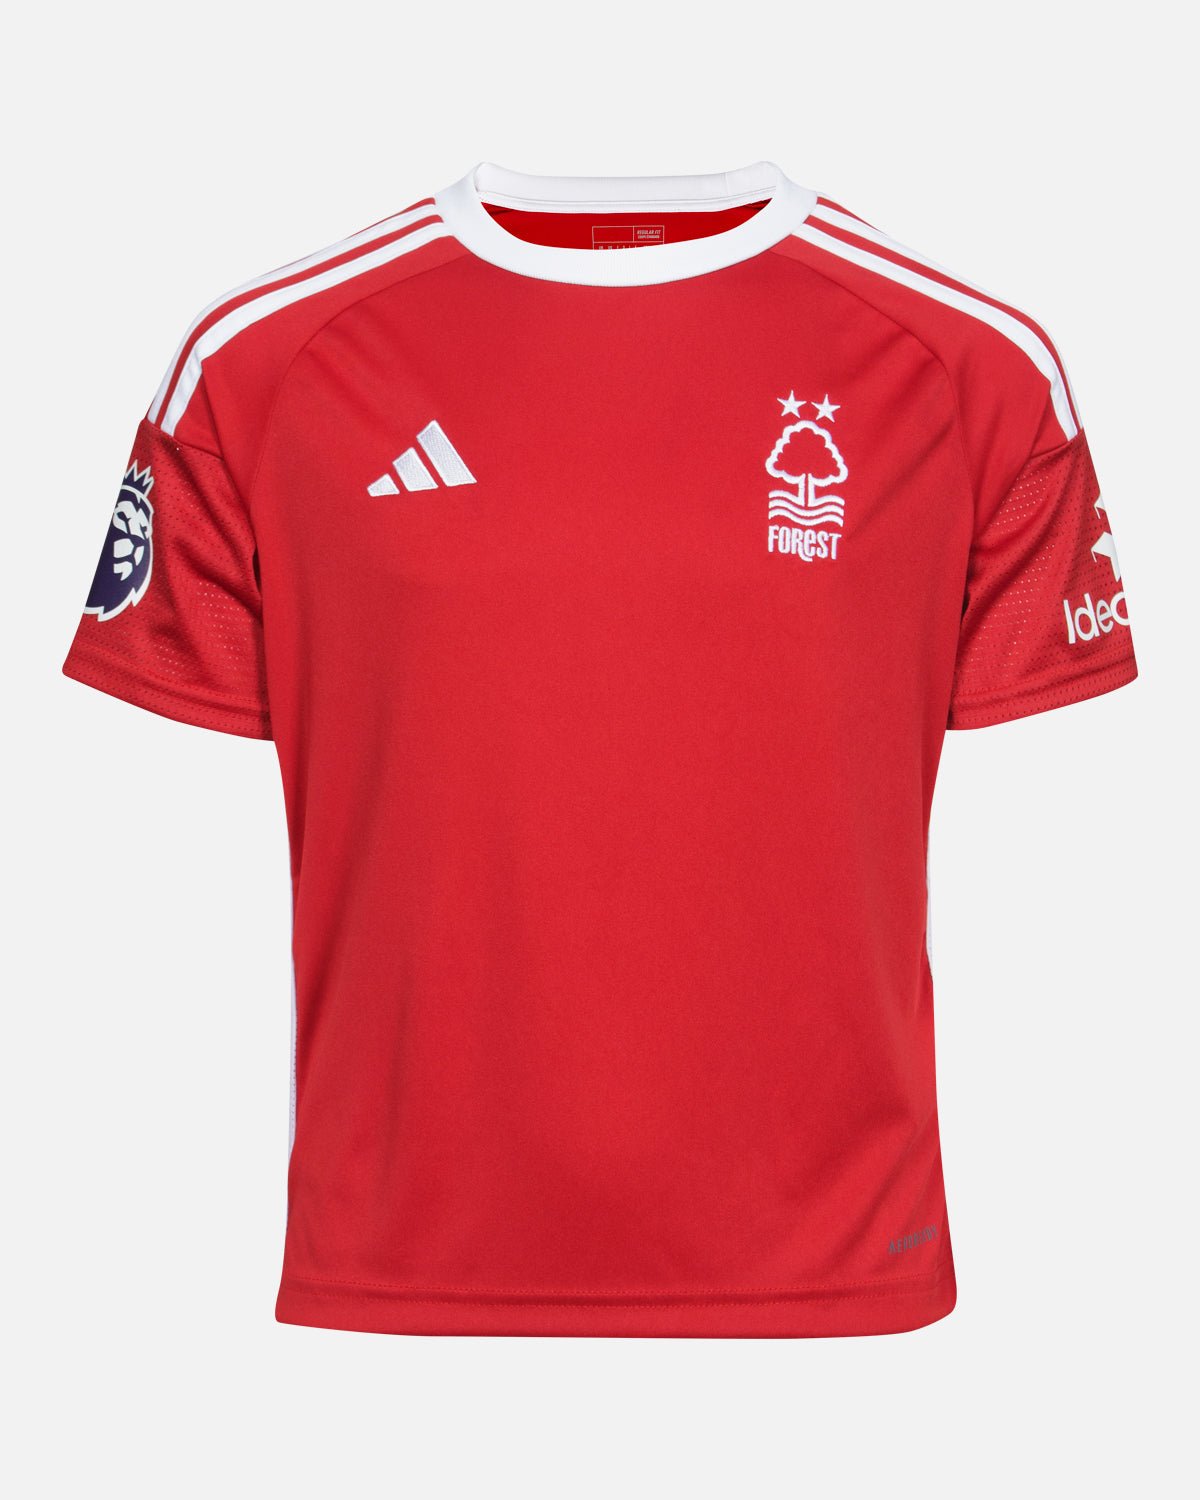 NFFC Junior Home Shirt 23-24 - Nottingham Forest FC